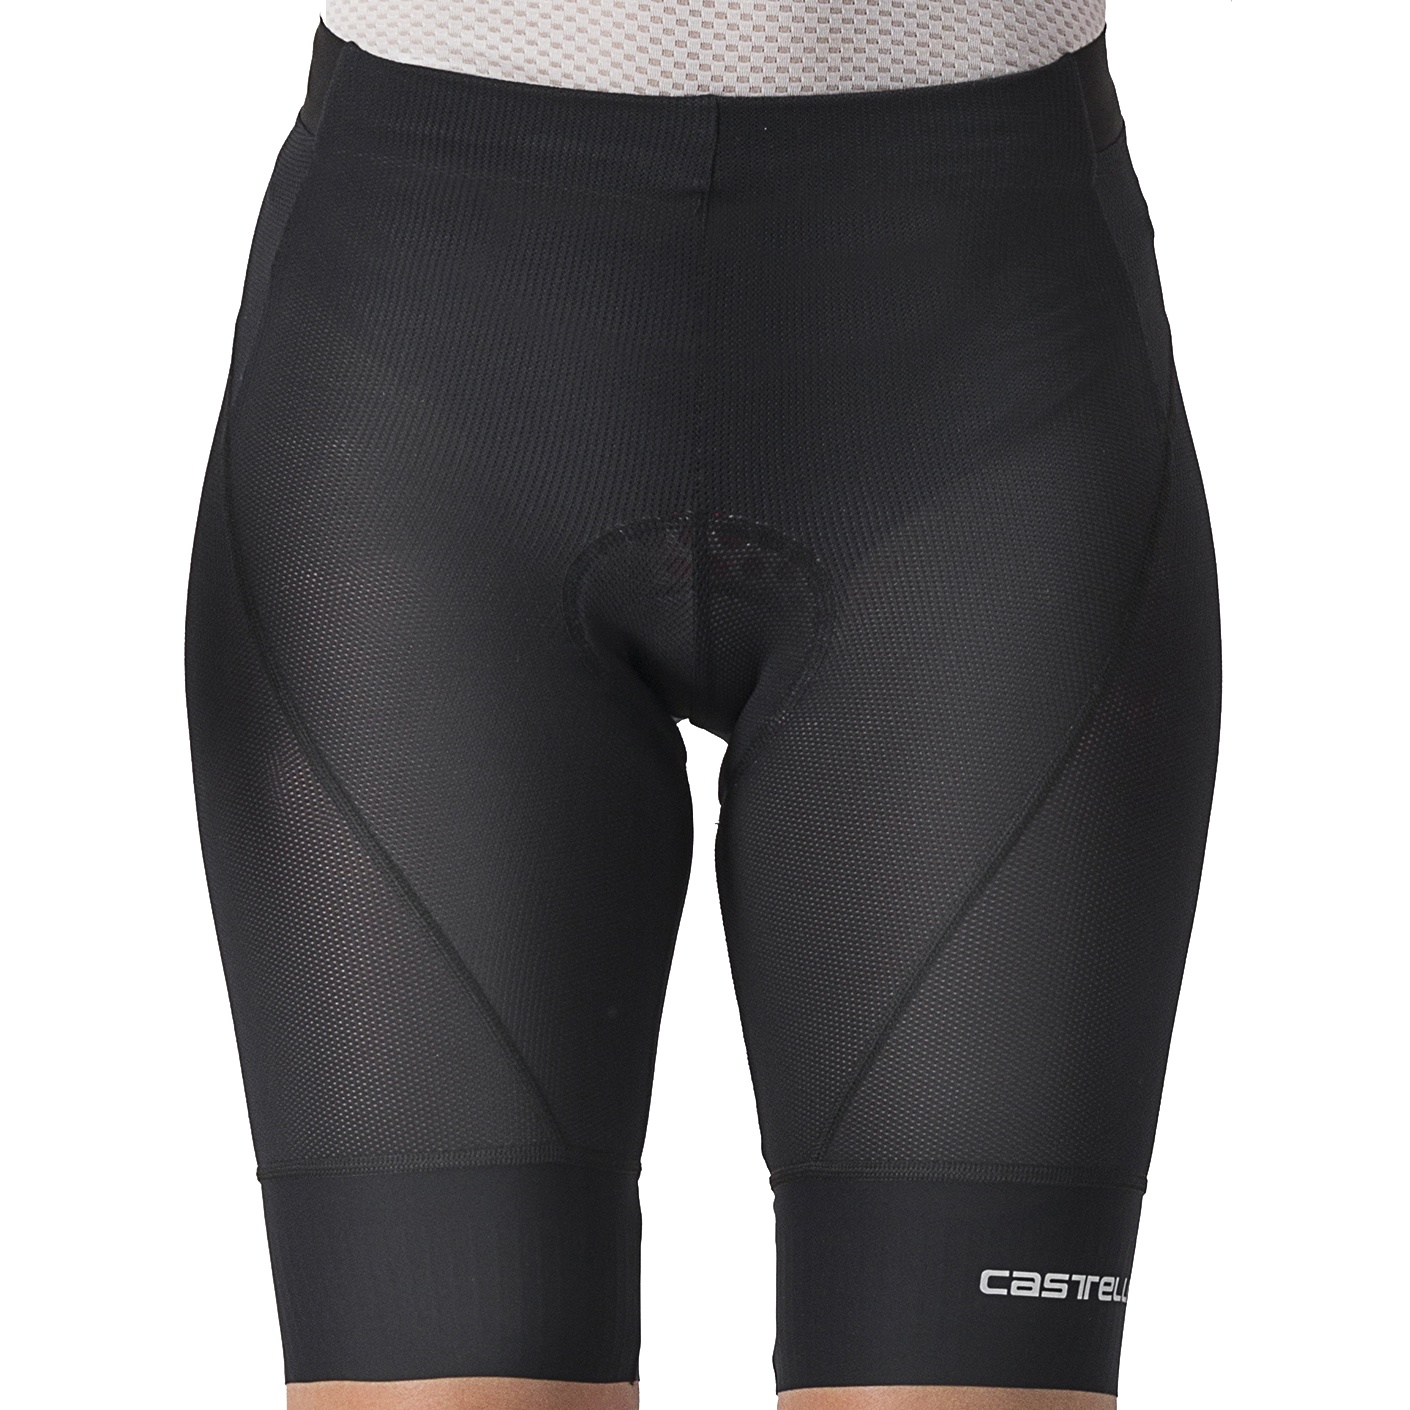 Productfoto van Castelli Trail W Liner Shorts Dames - zwart 010